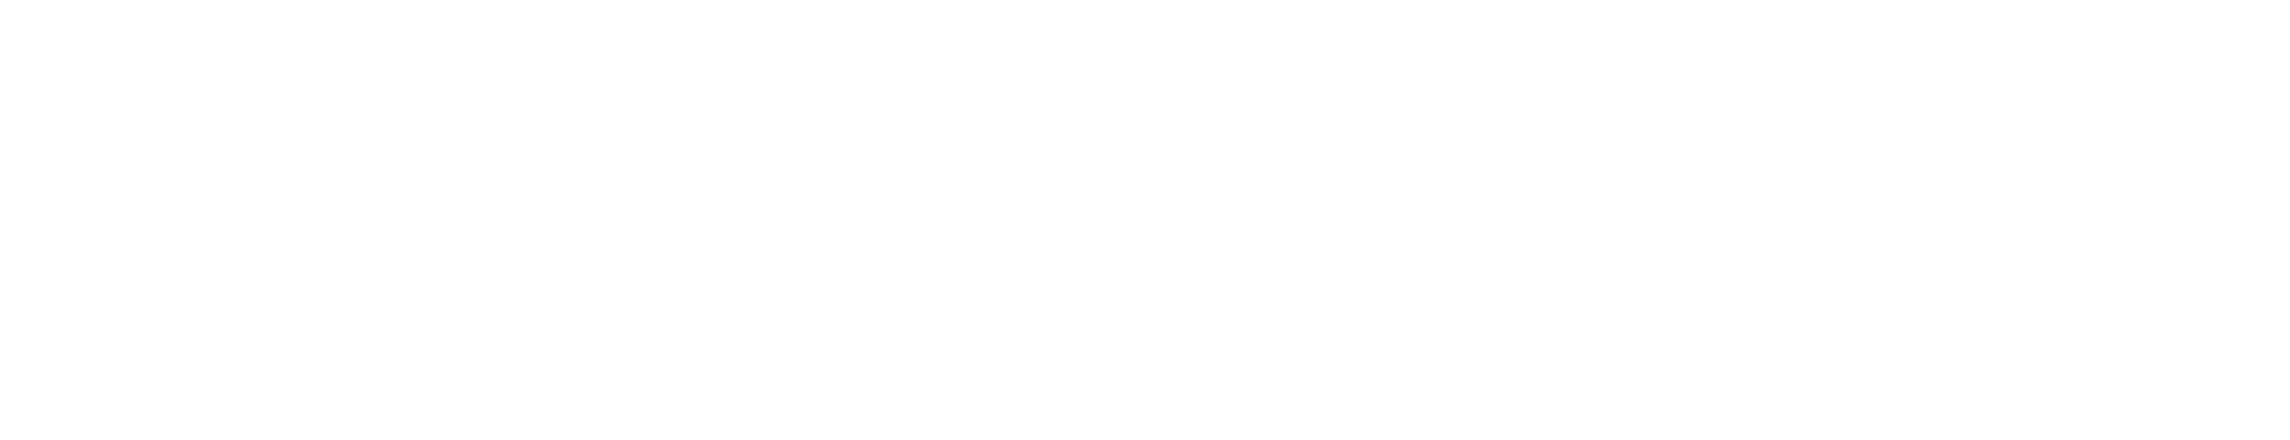 Vokalt logo